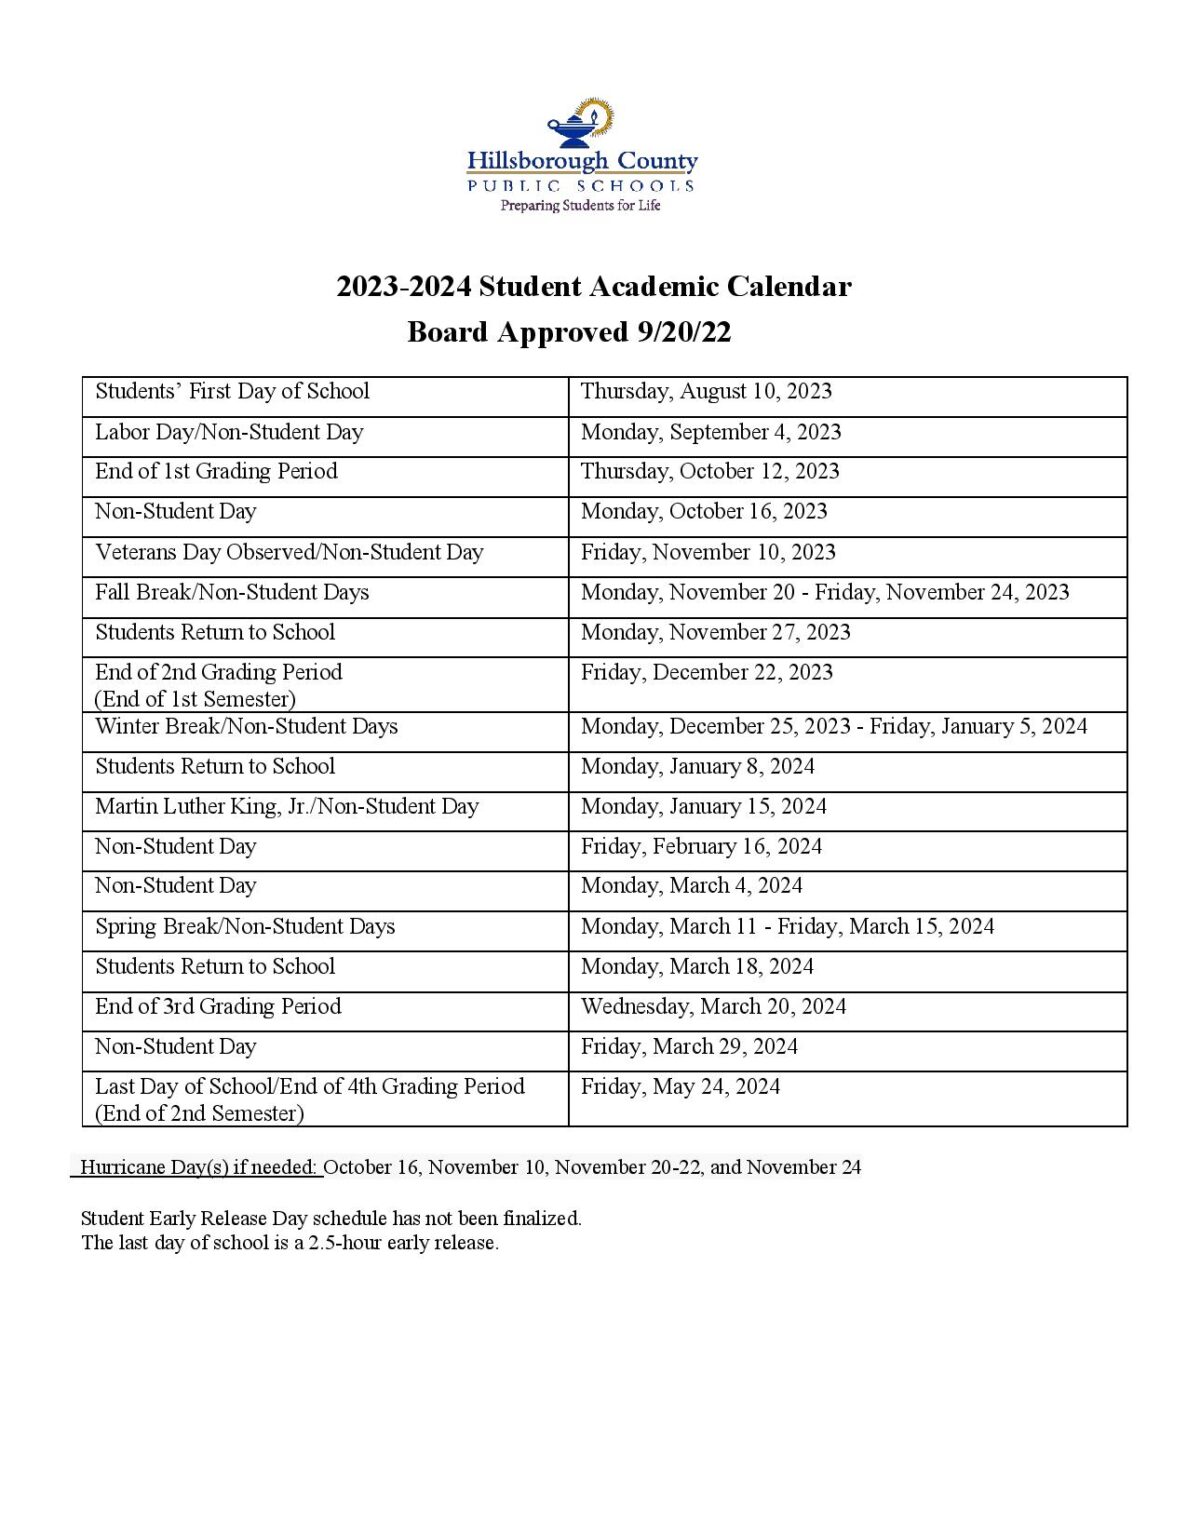 Hillsborough County Public Schools Calendar Holidays 20232024